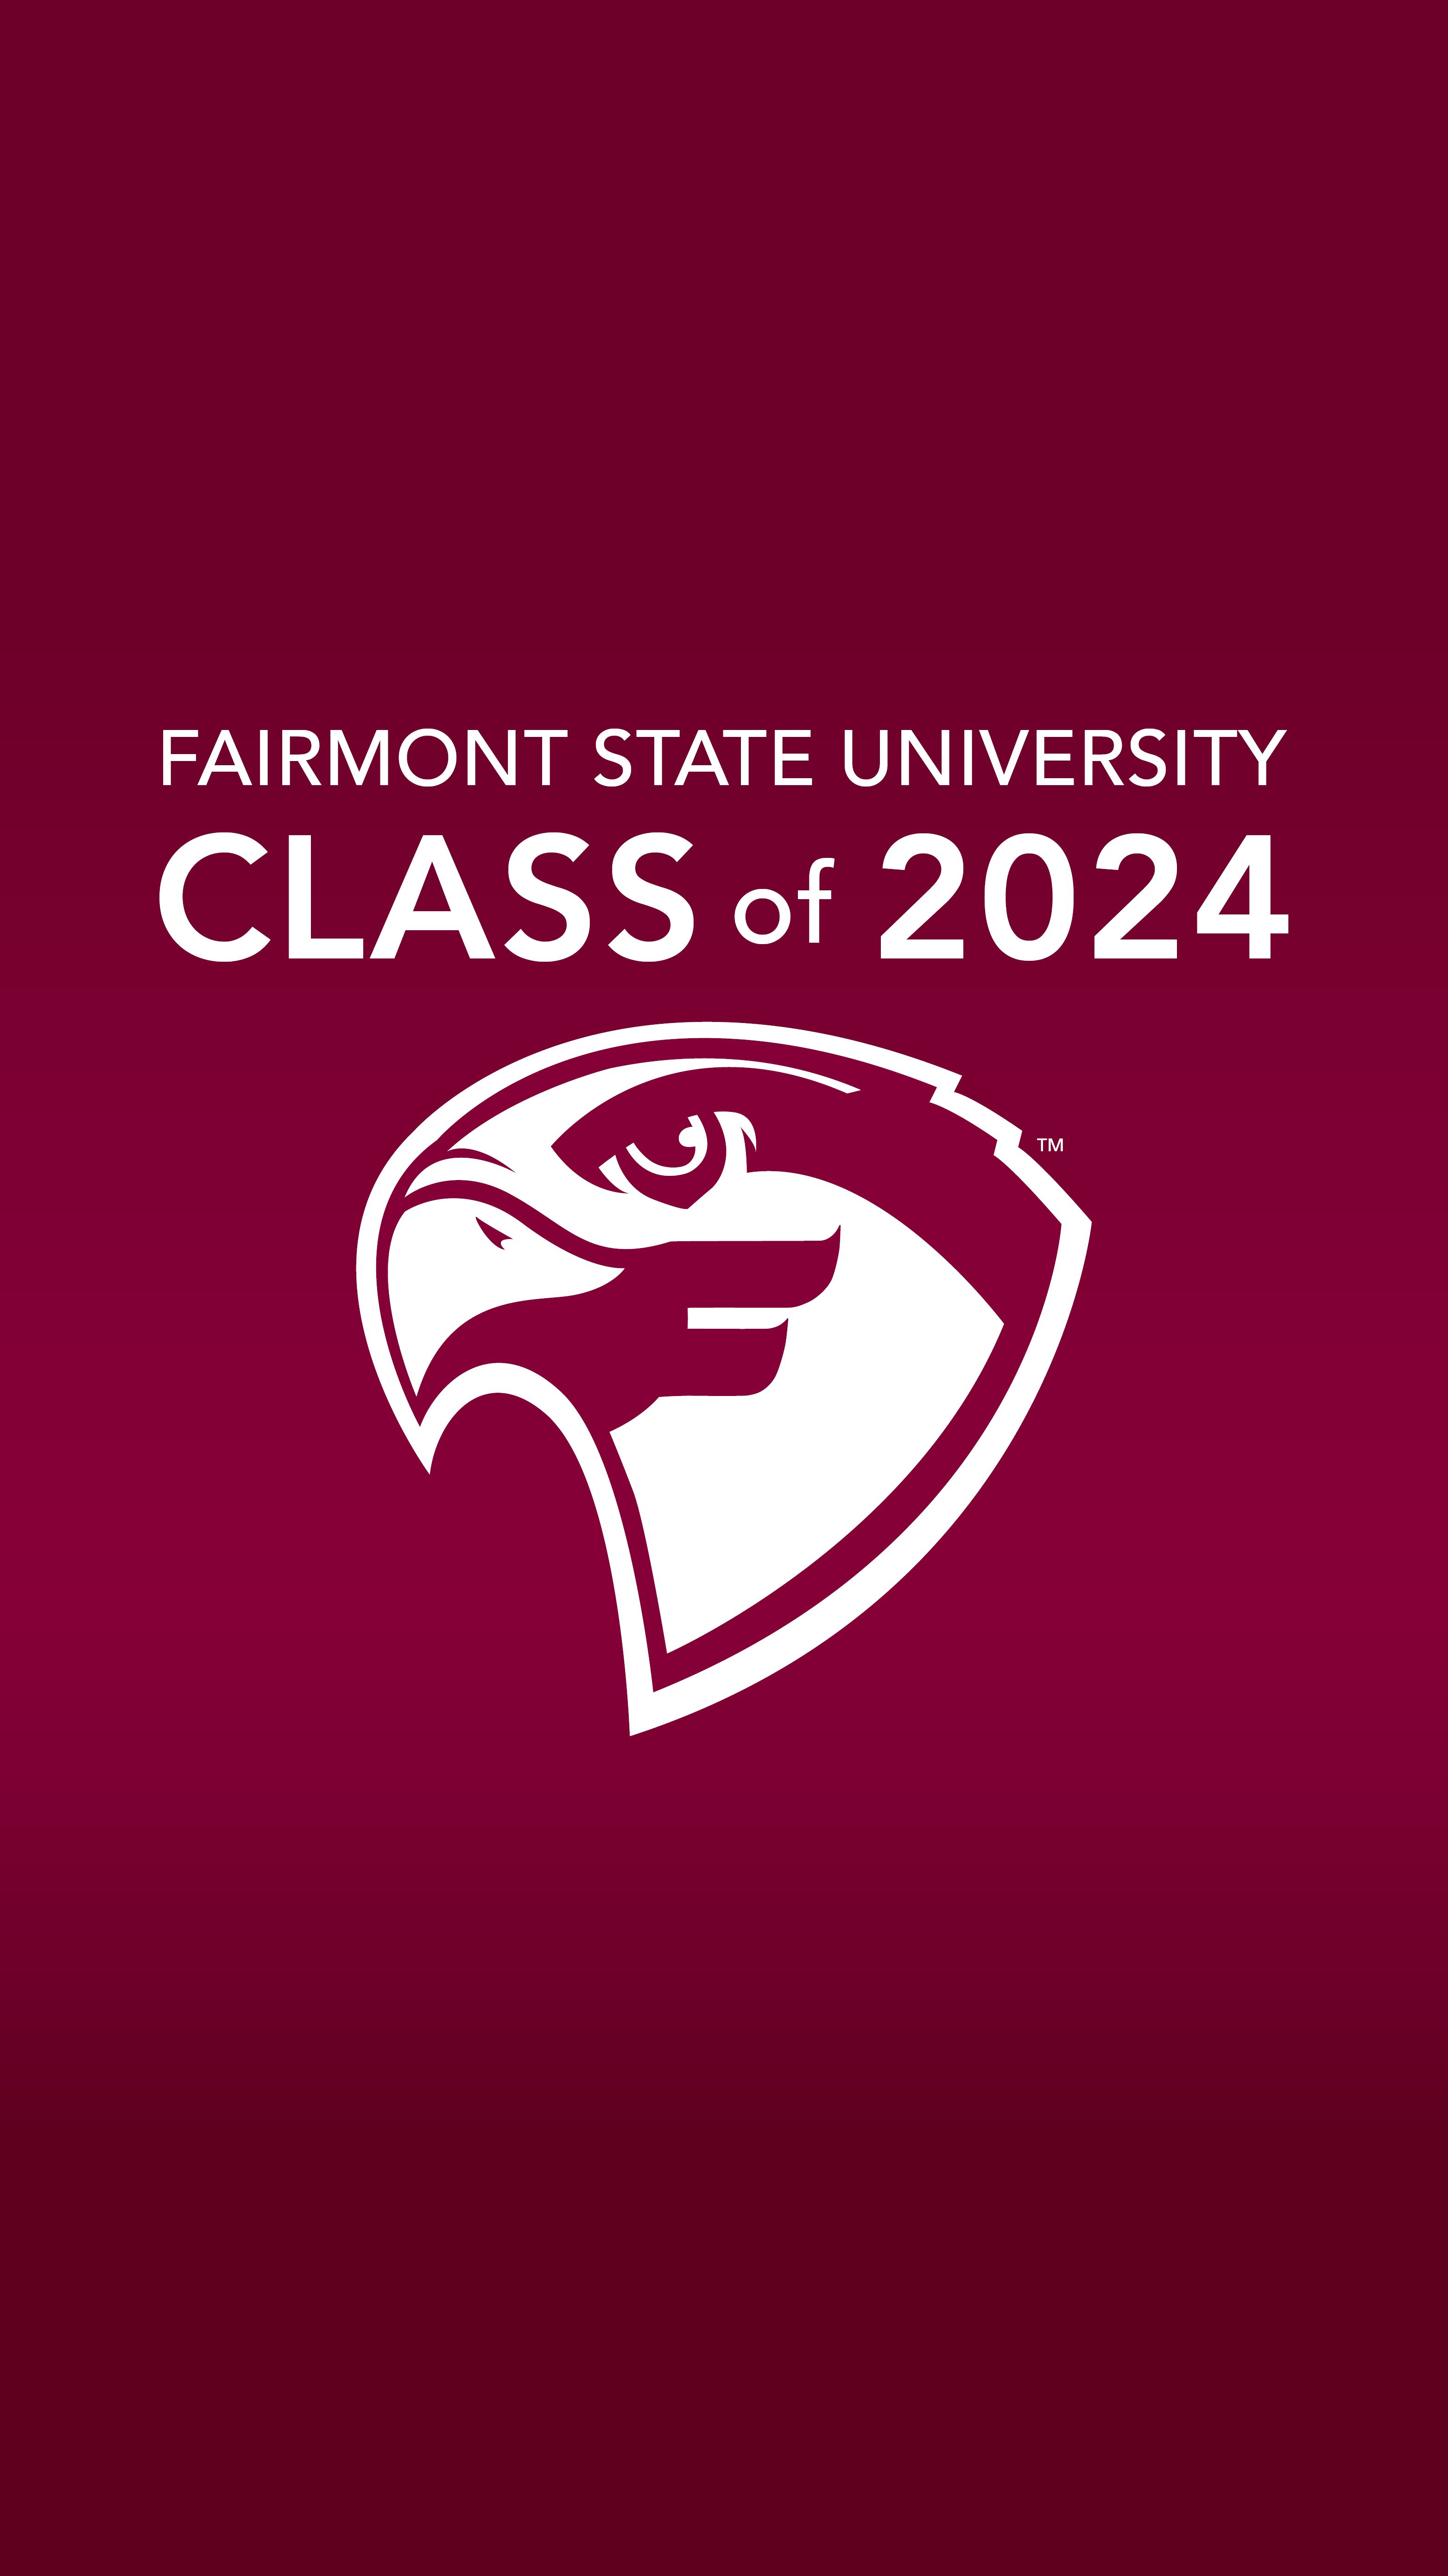 Fairmont State Wallpaper. About Fairmont State University